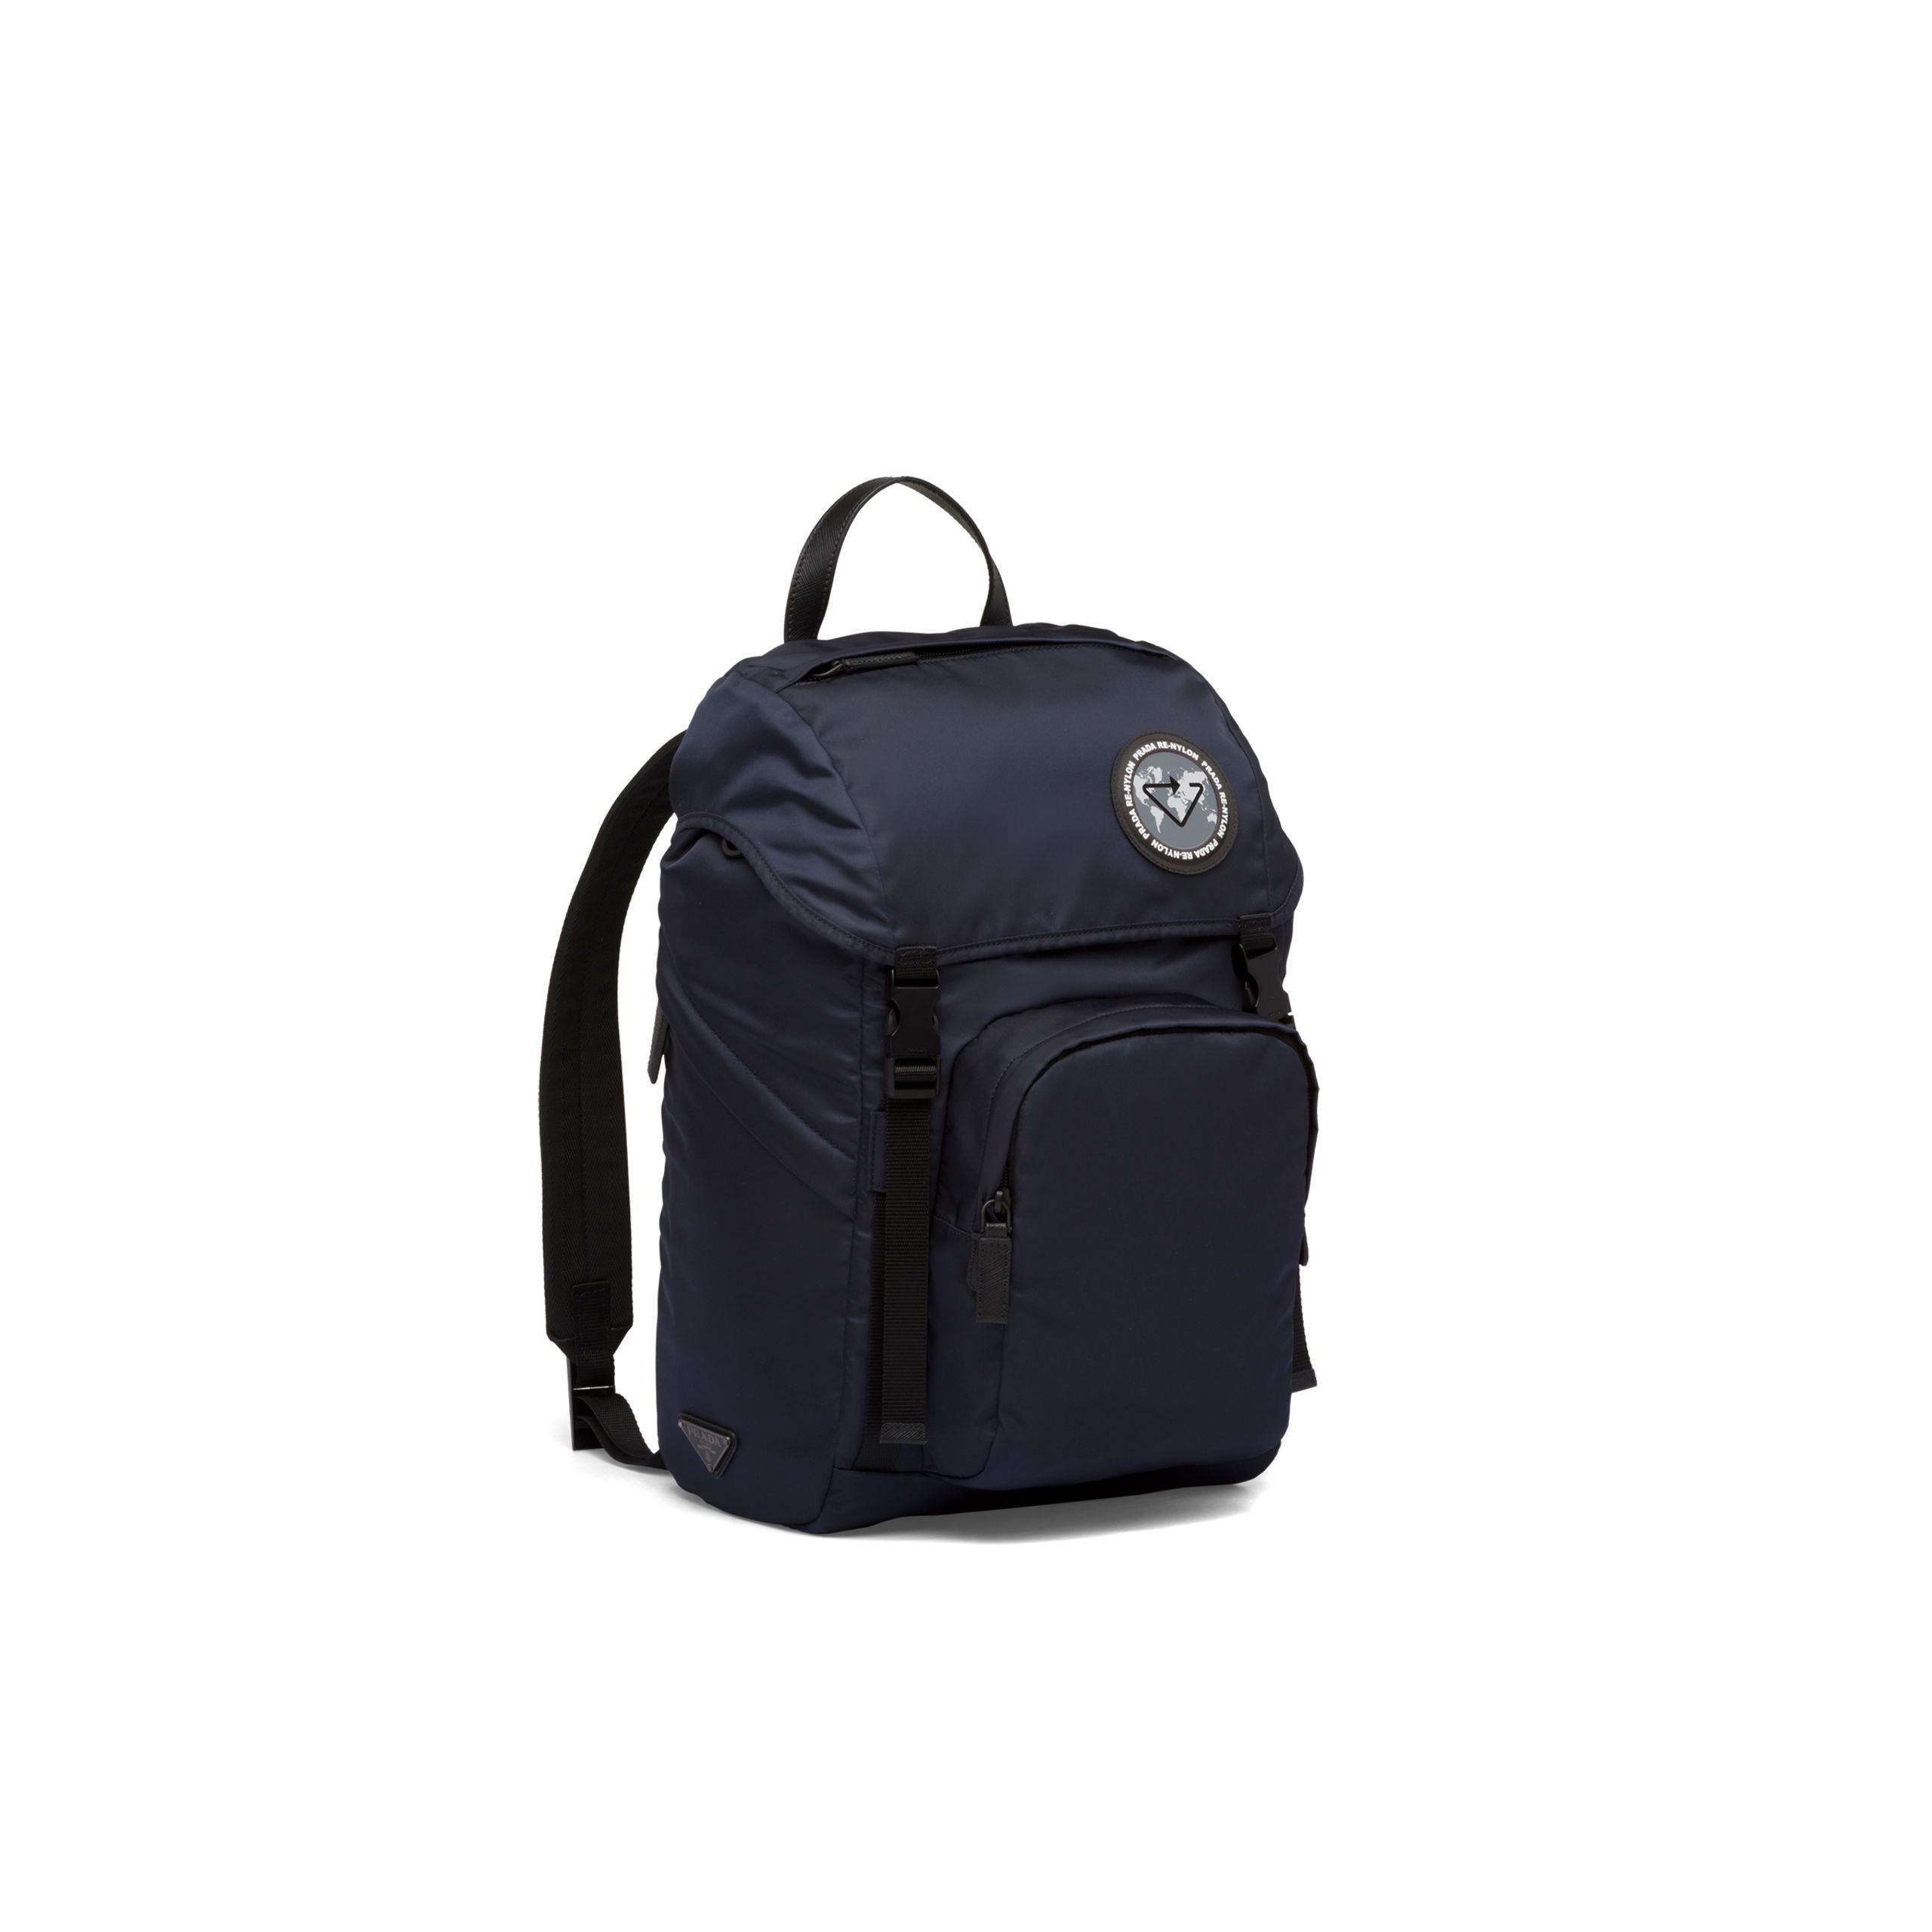 Prada Synthetic Re-nylon Backpack in Black - Lyst